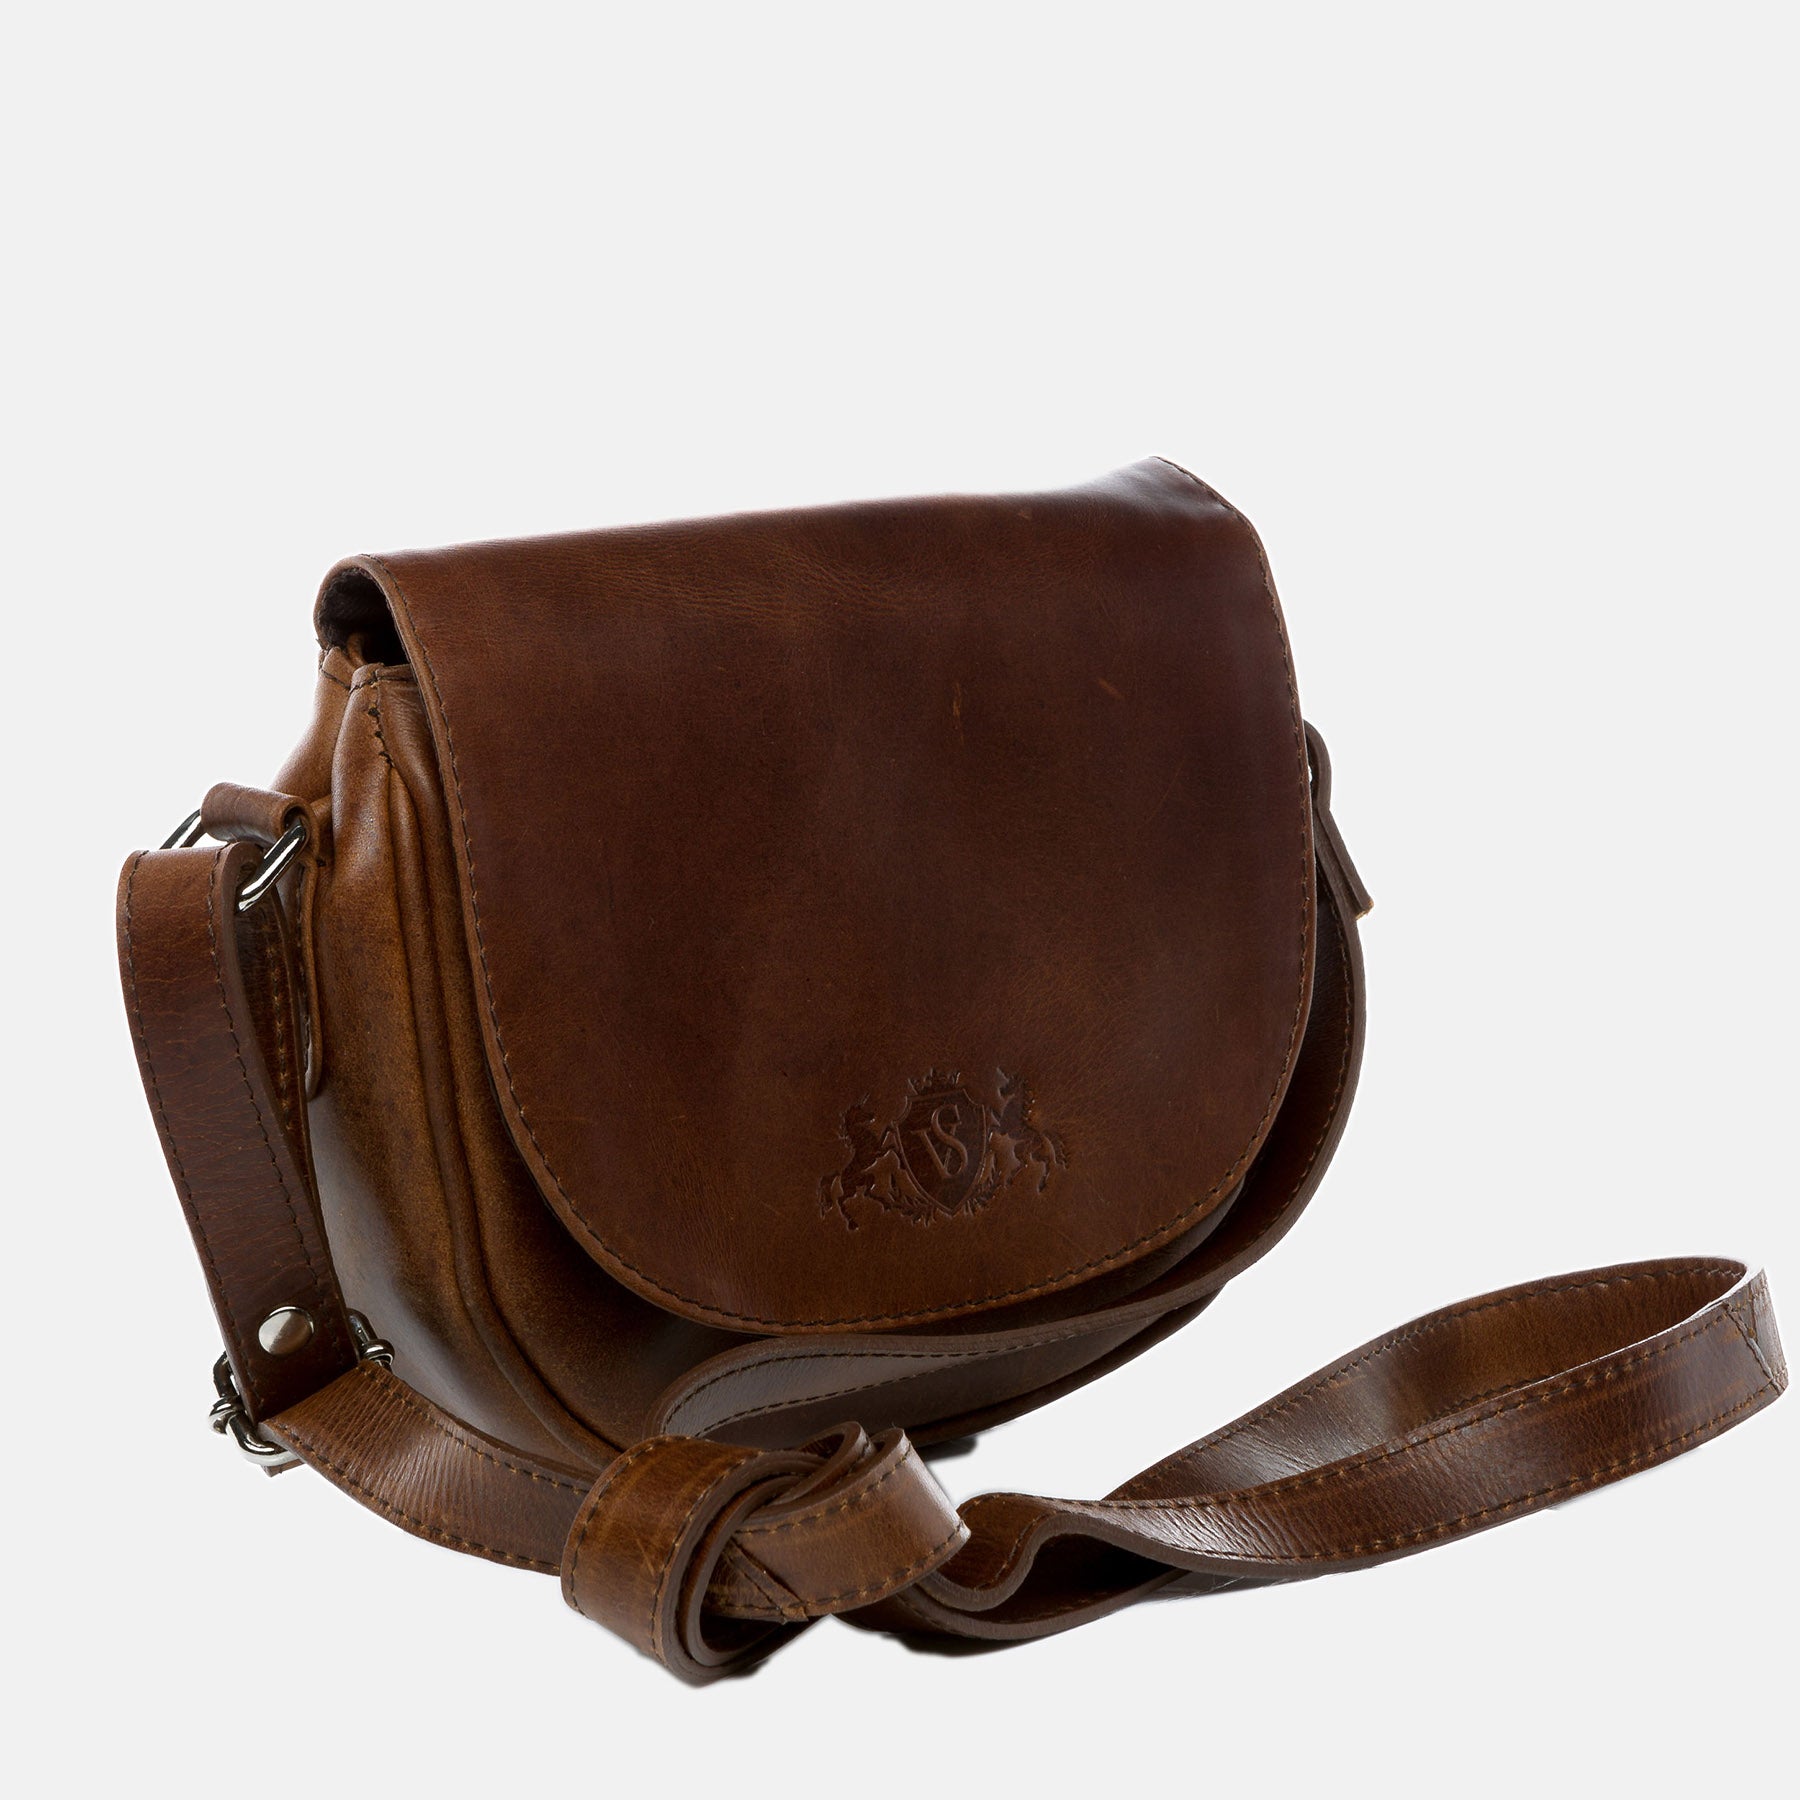 Shoulder bag BRIGHTON natural leather brown-cognac